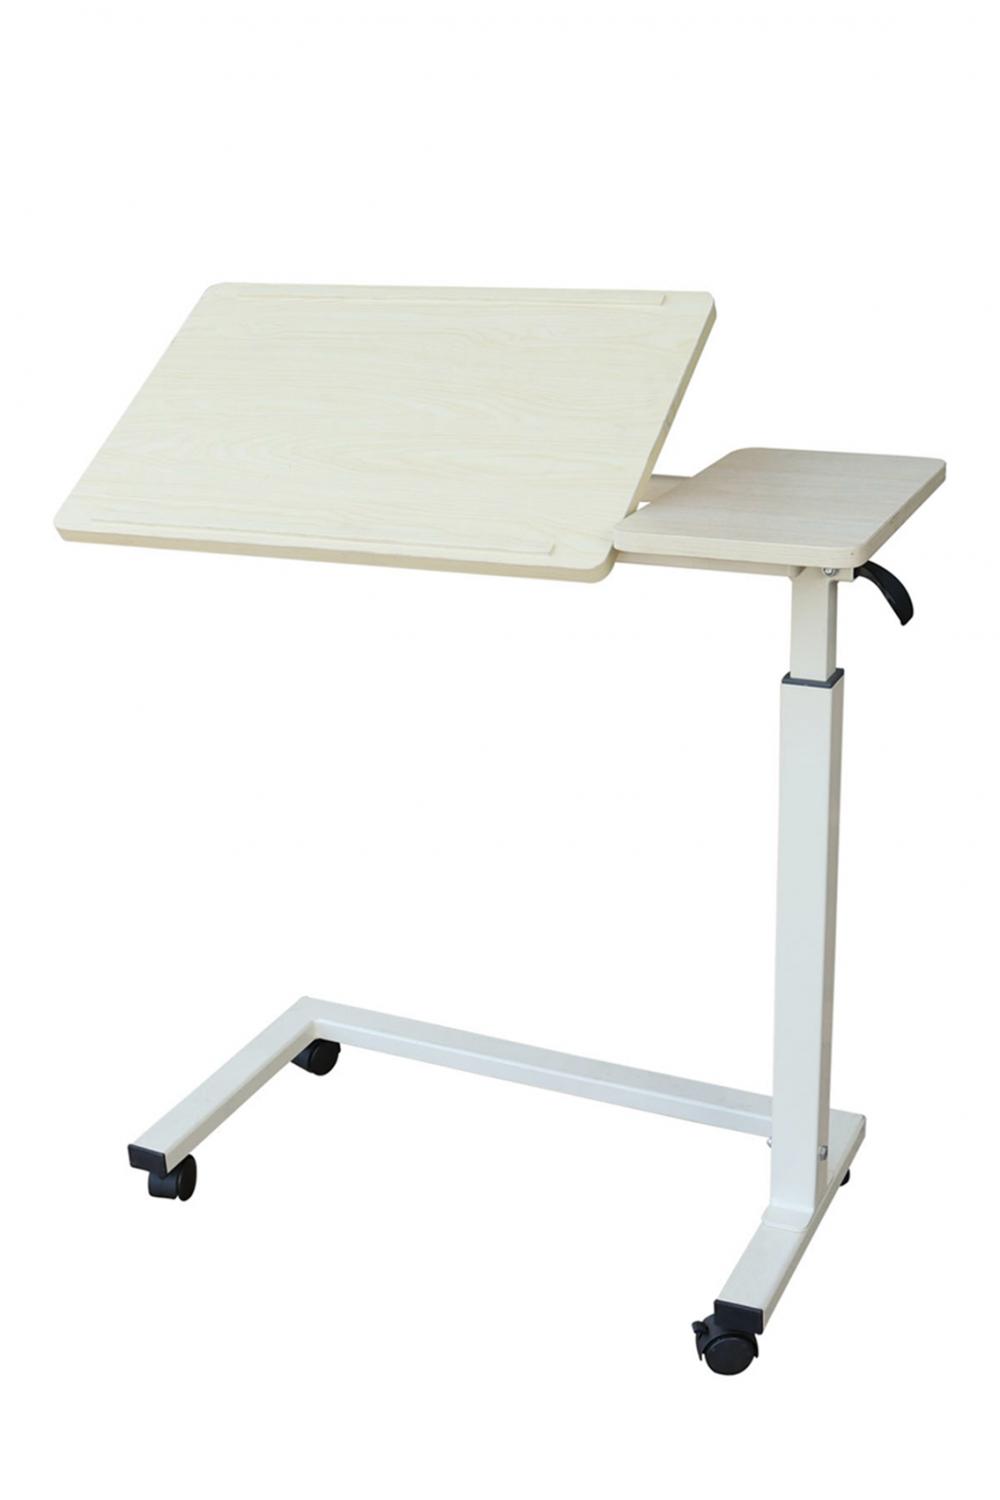 Adjustable patient bedside table